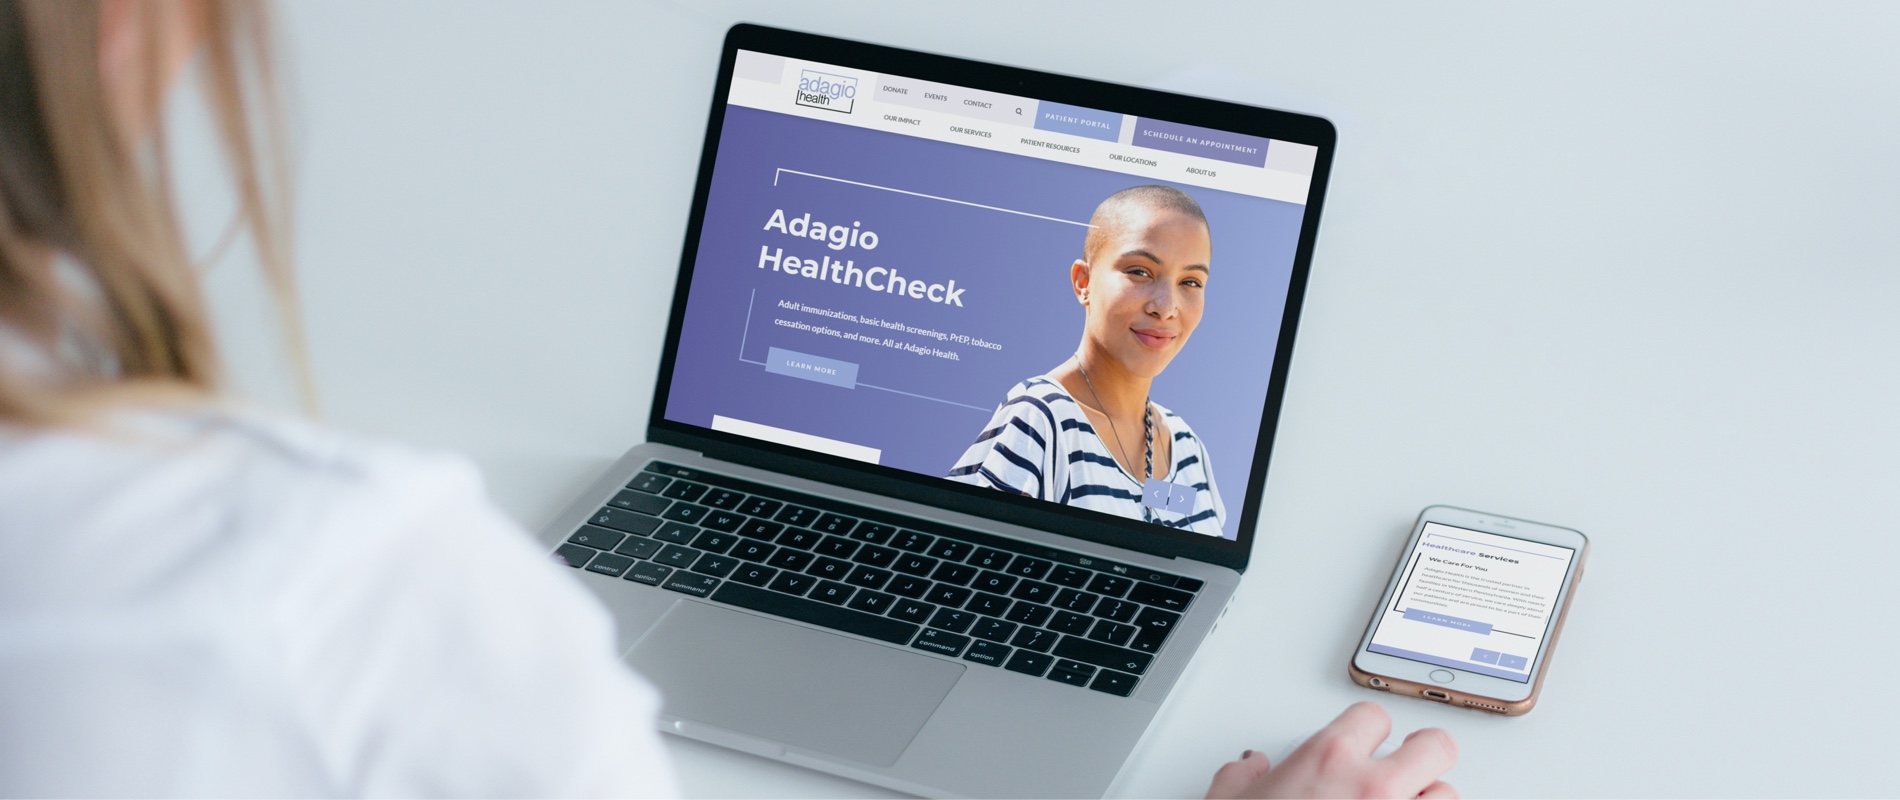 adagio health homepage on a computer screen